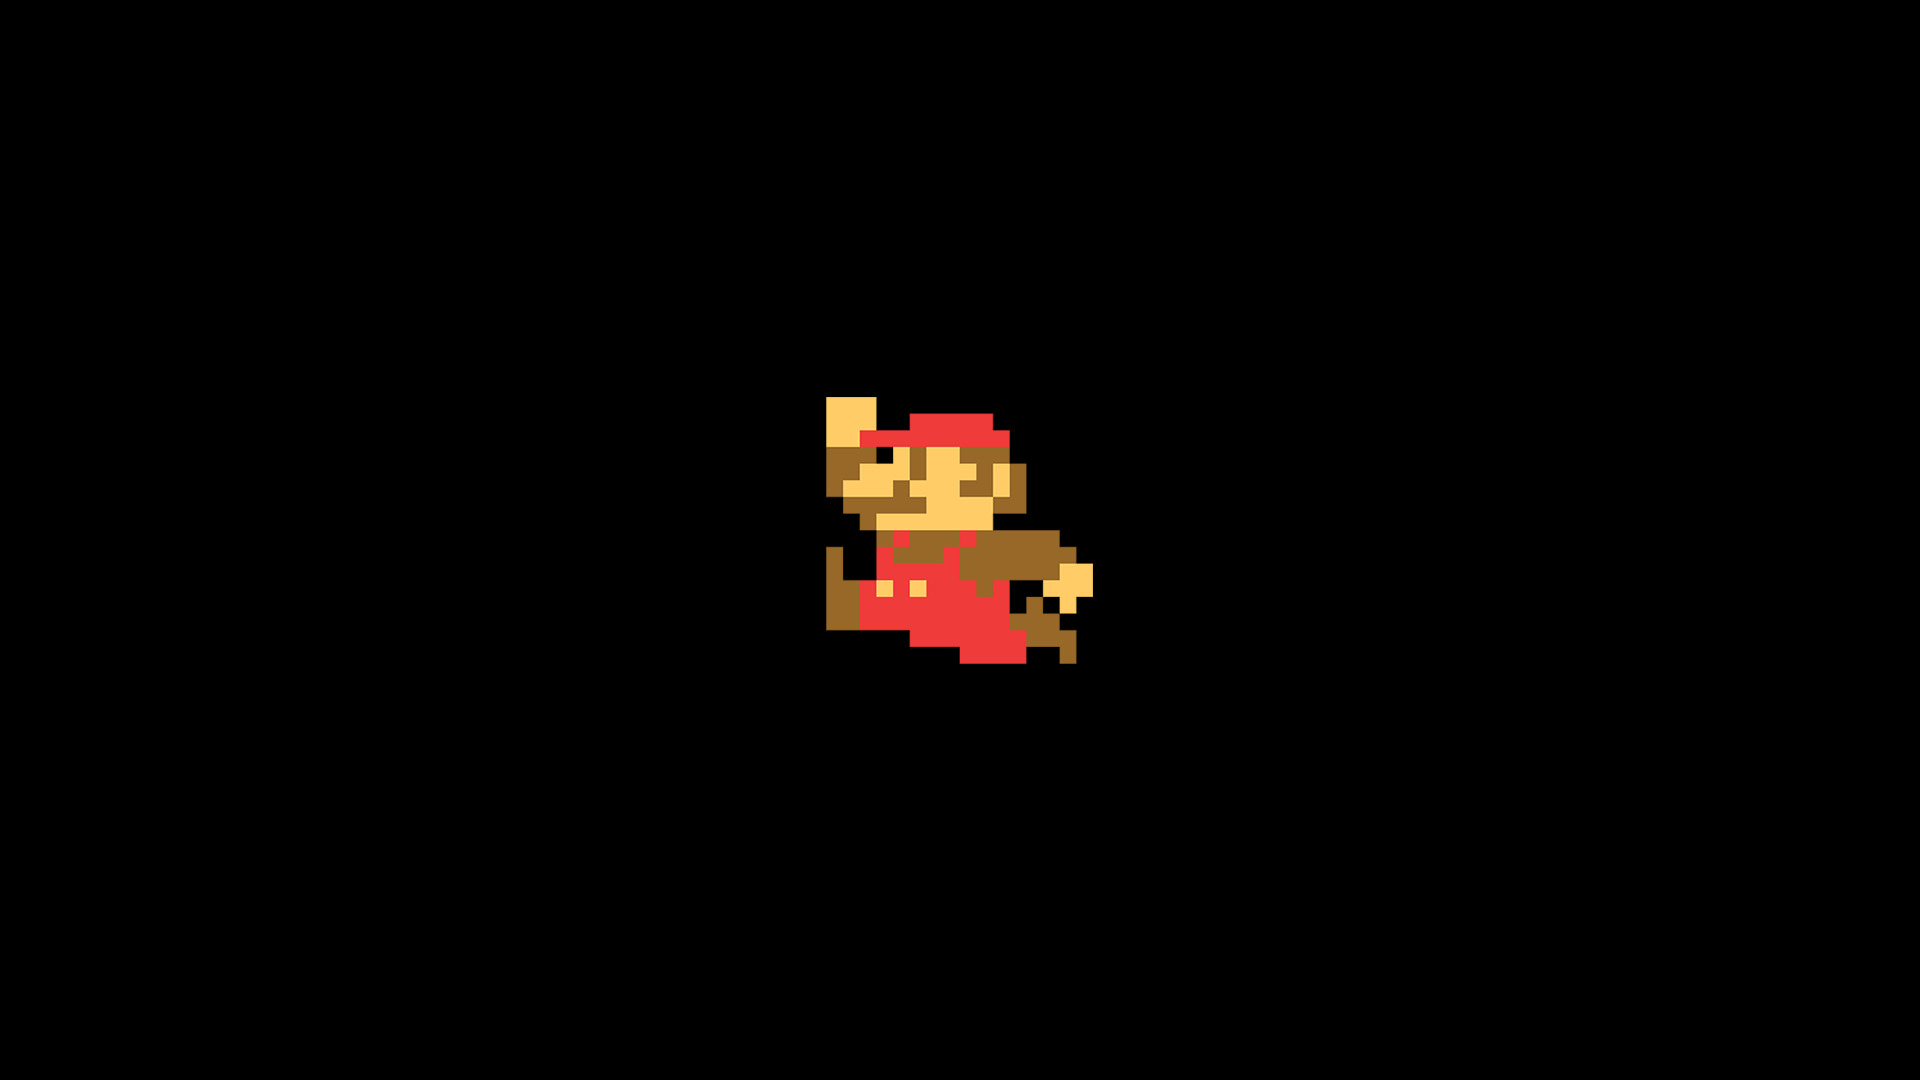 8 Bit Super Mario Minimalism Video Games Pixels Wallpapers Hd Desktop And Mobile Backgrounds